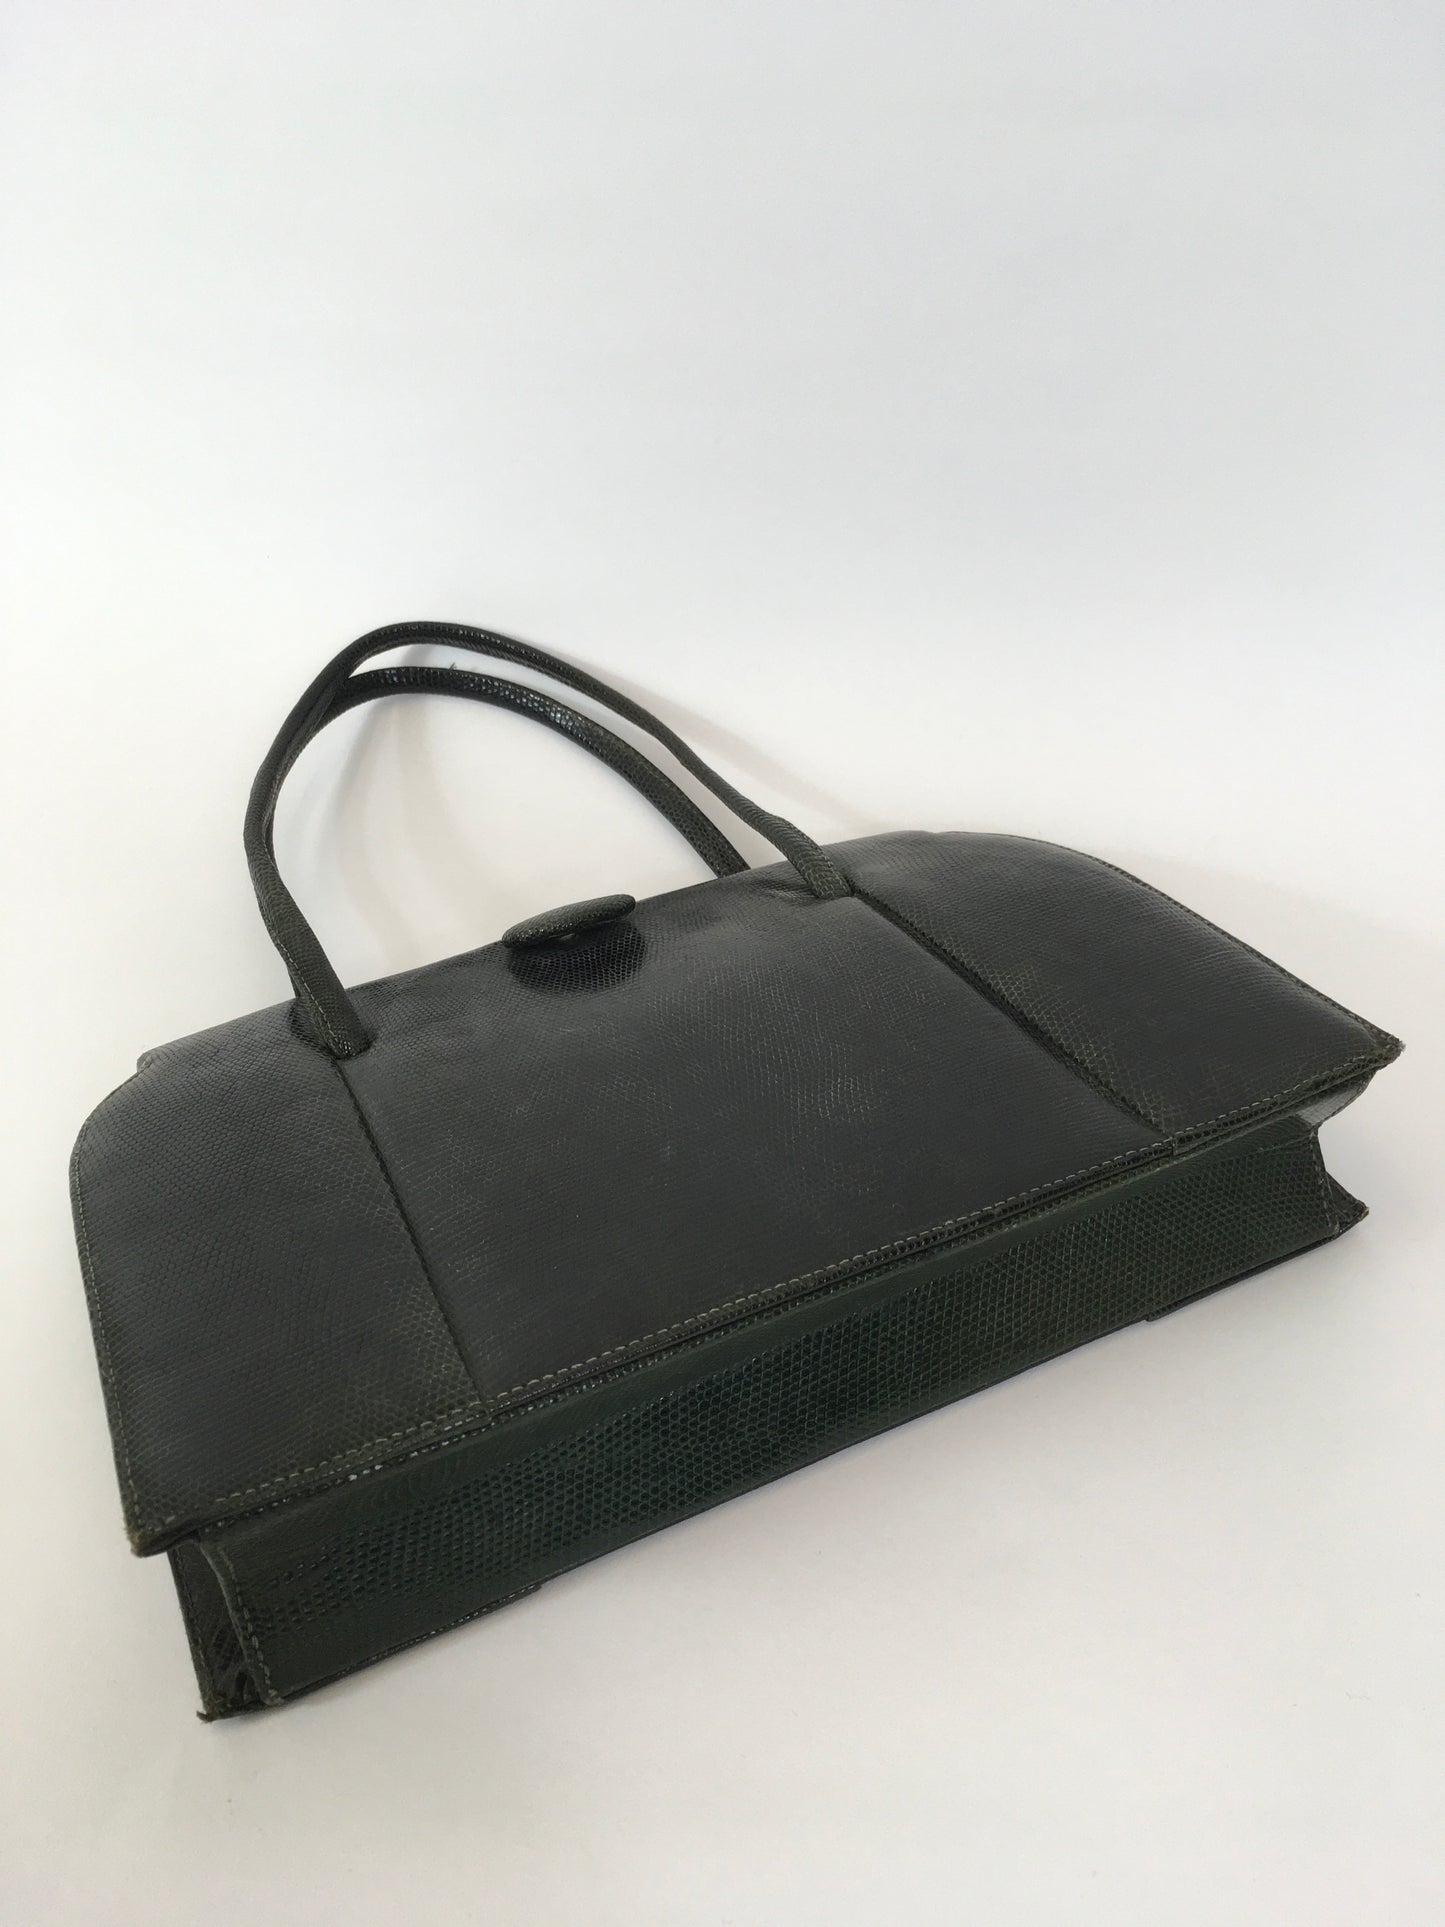 Original Late 1940’s Dark Green Leather Handbag - By ‘ Finnigans Label of London ‘